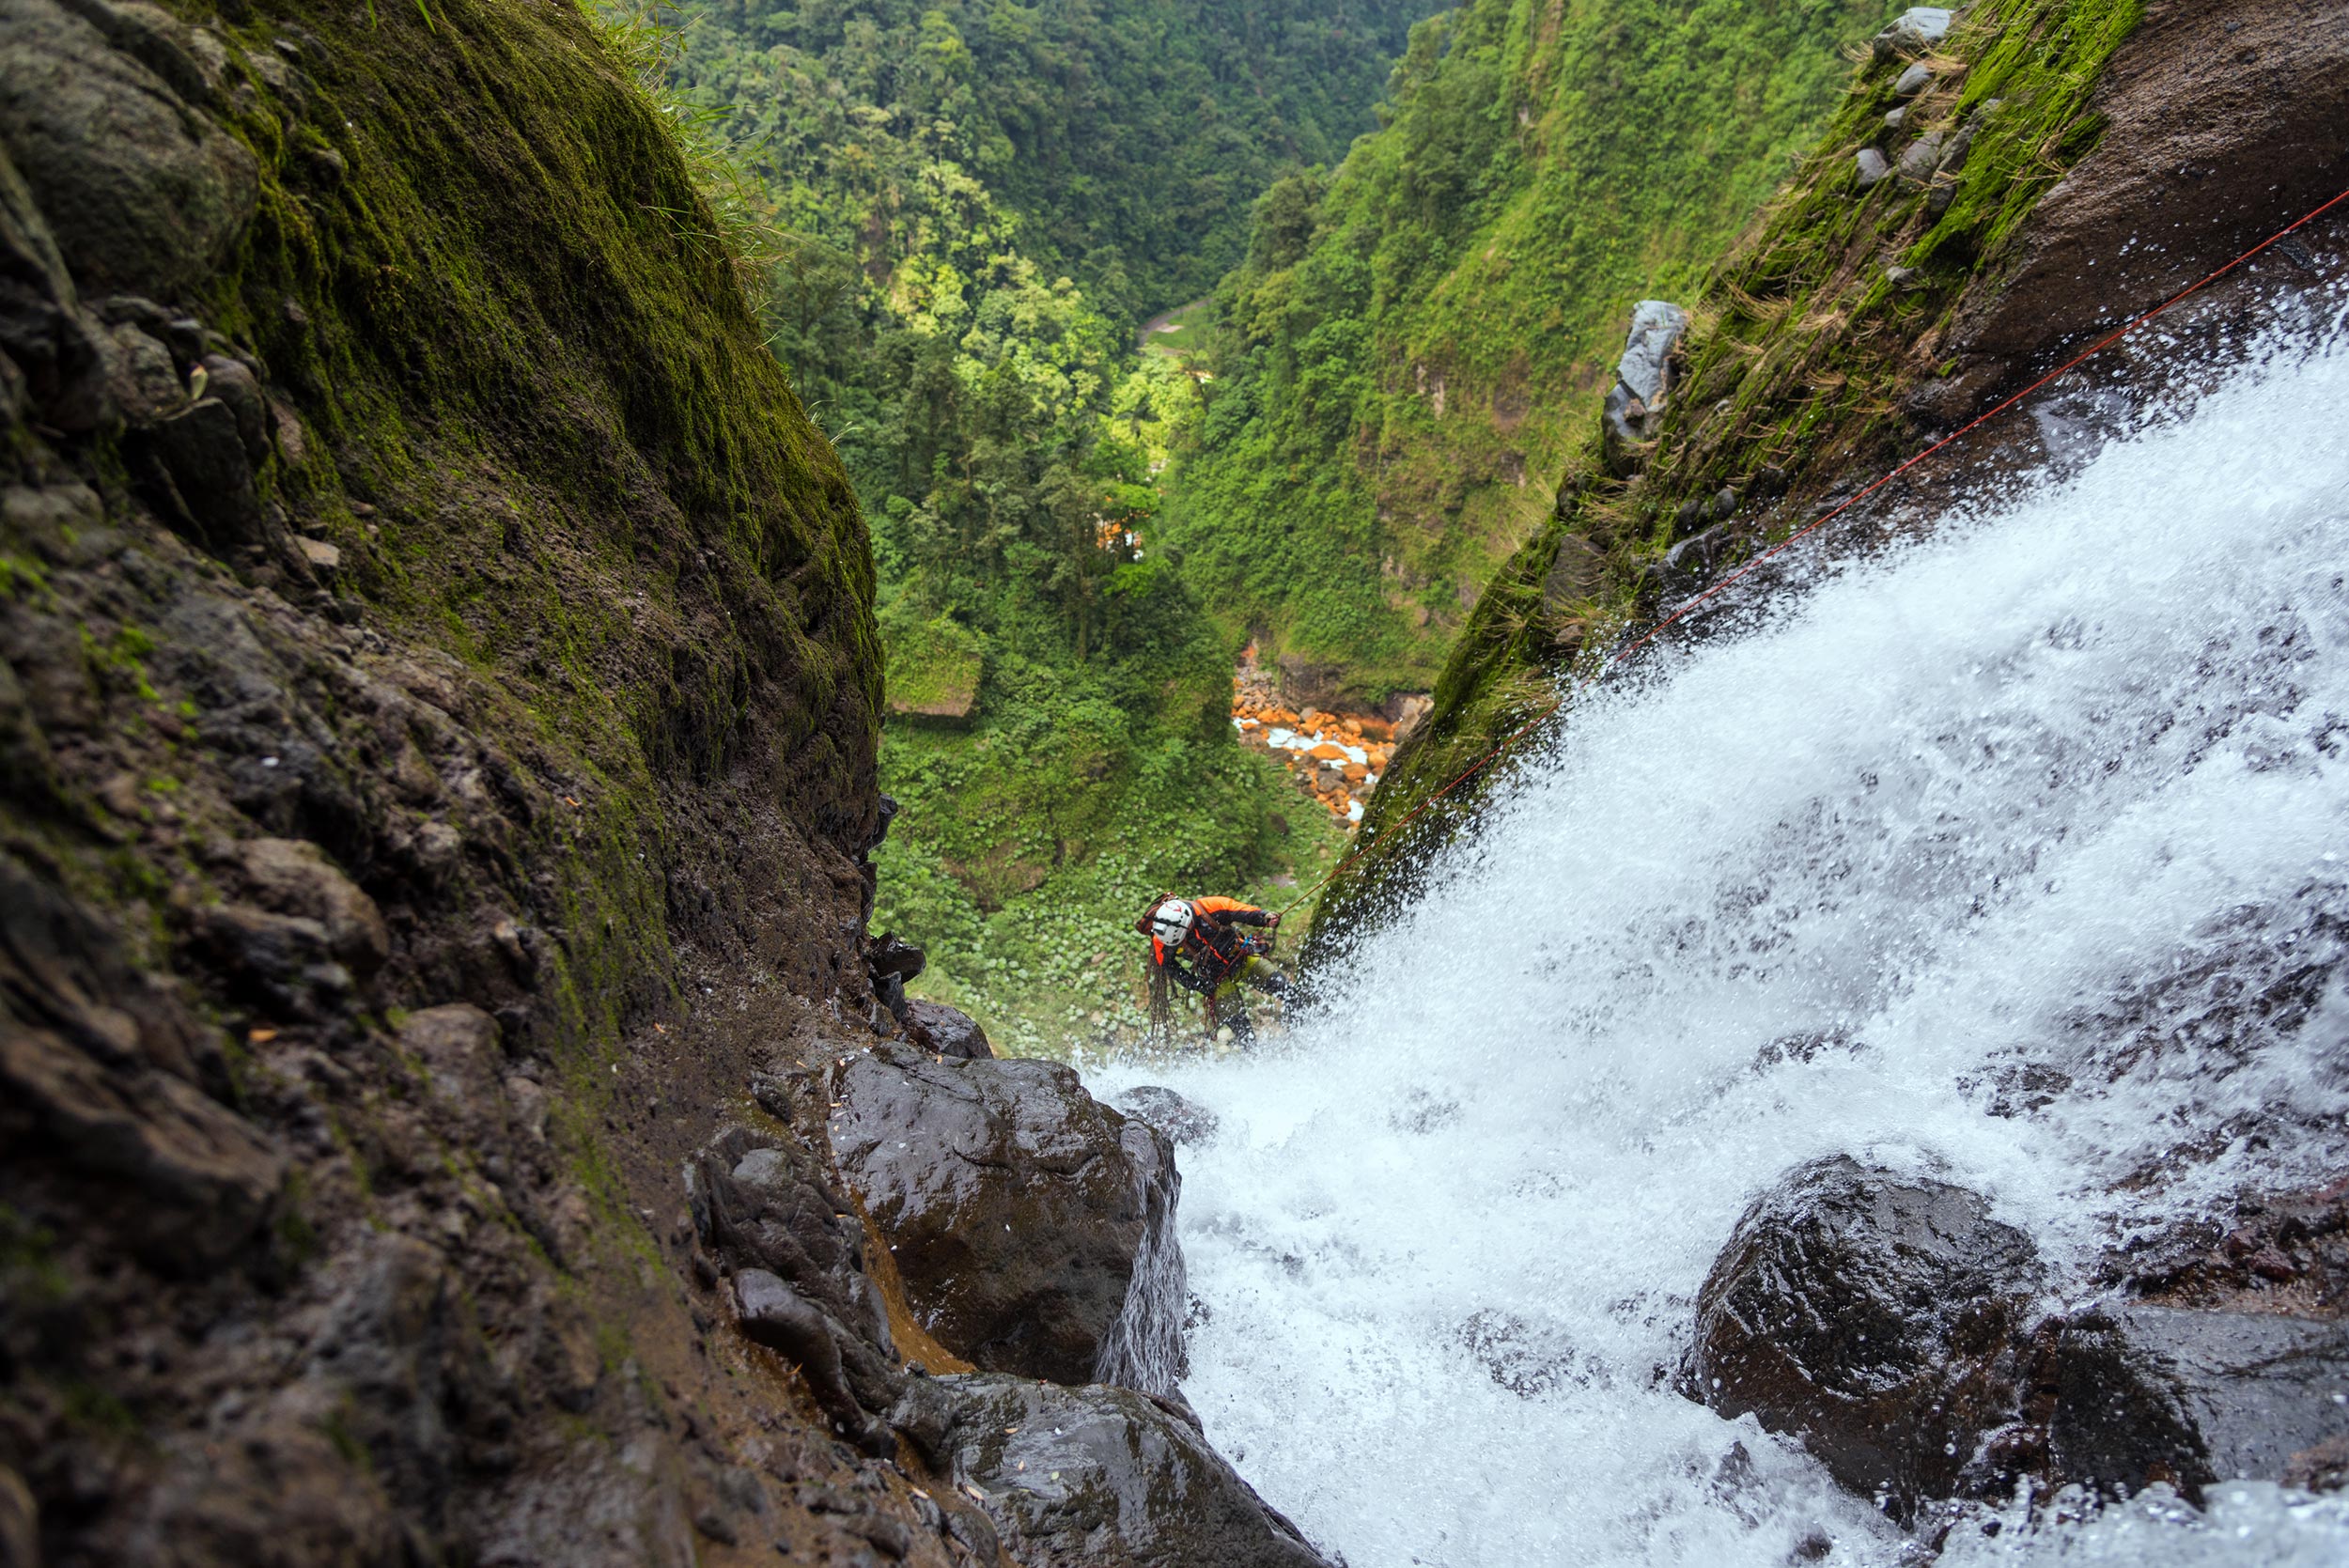 Daniel rappels off the edge of the 400 ft. monster waterfall. Photo: Victor Hugo Carvajal 